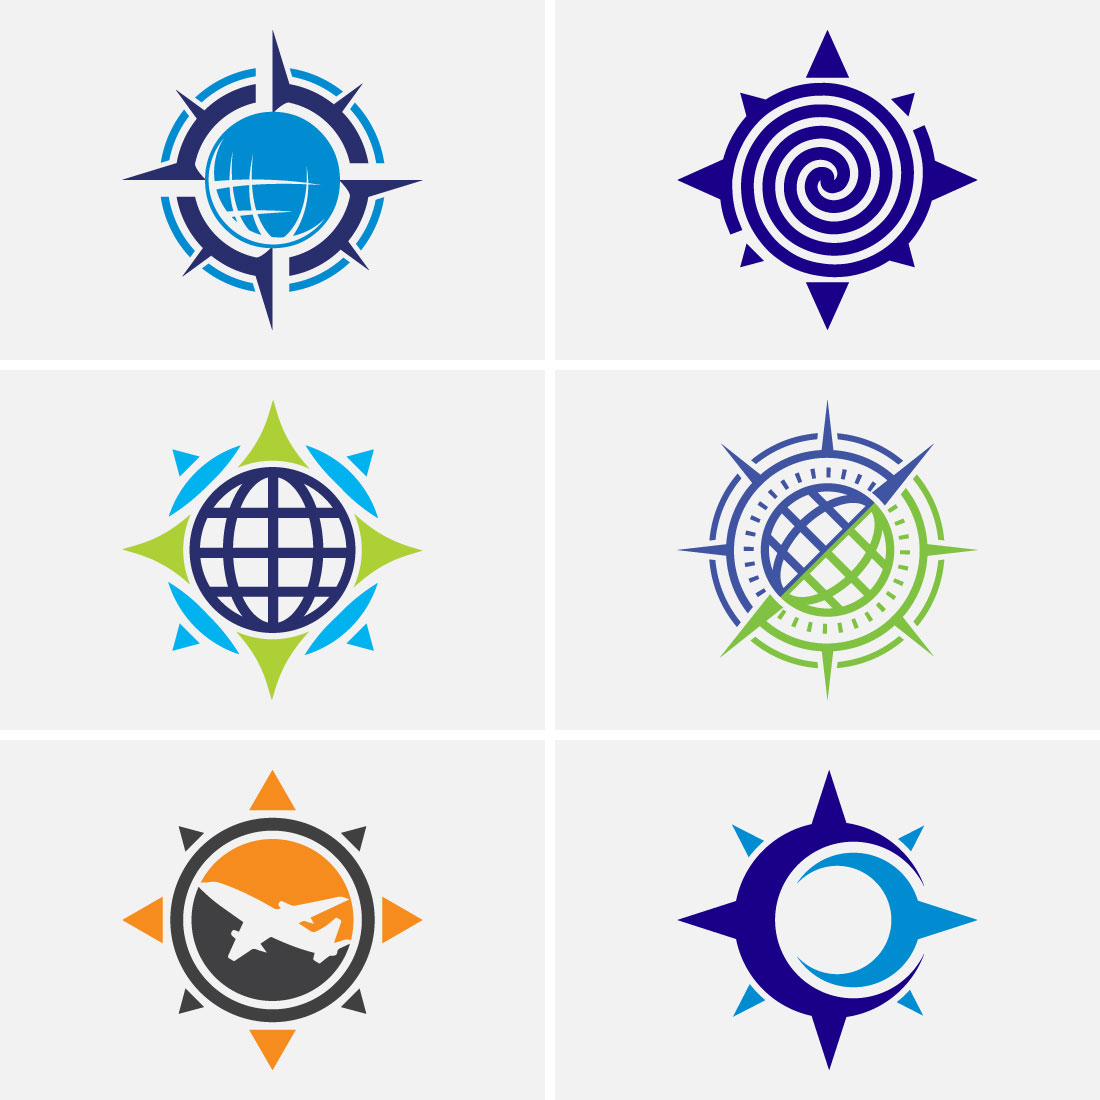 Creative Compass Concept Logo Design Template cover image.